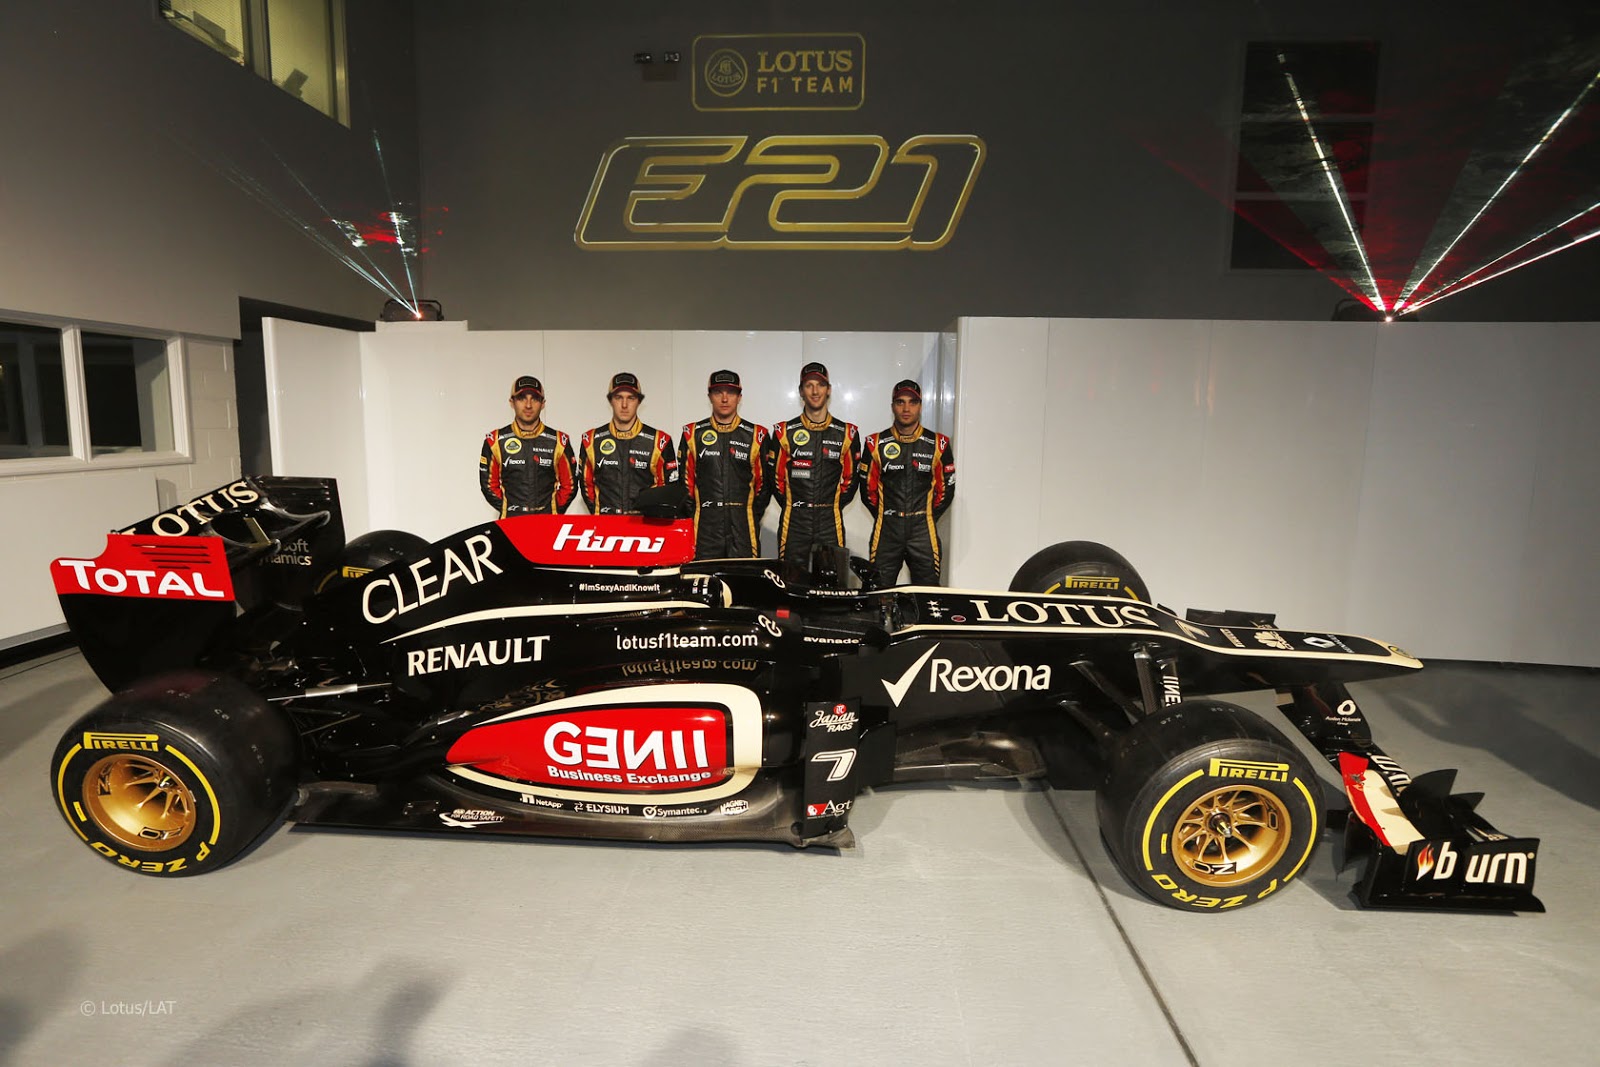 Lotus F1 | Lotus E21 | 2013 Formula one season | Lotus E21 F1 Car ...